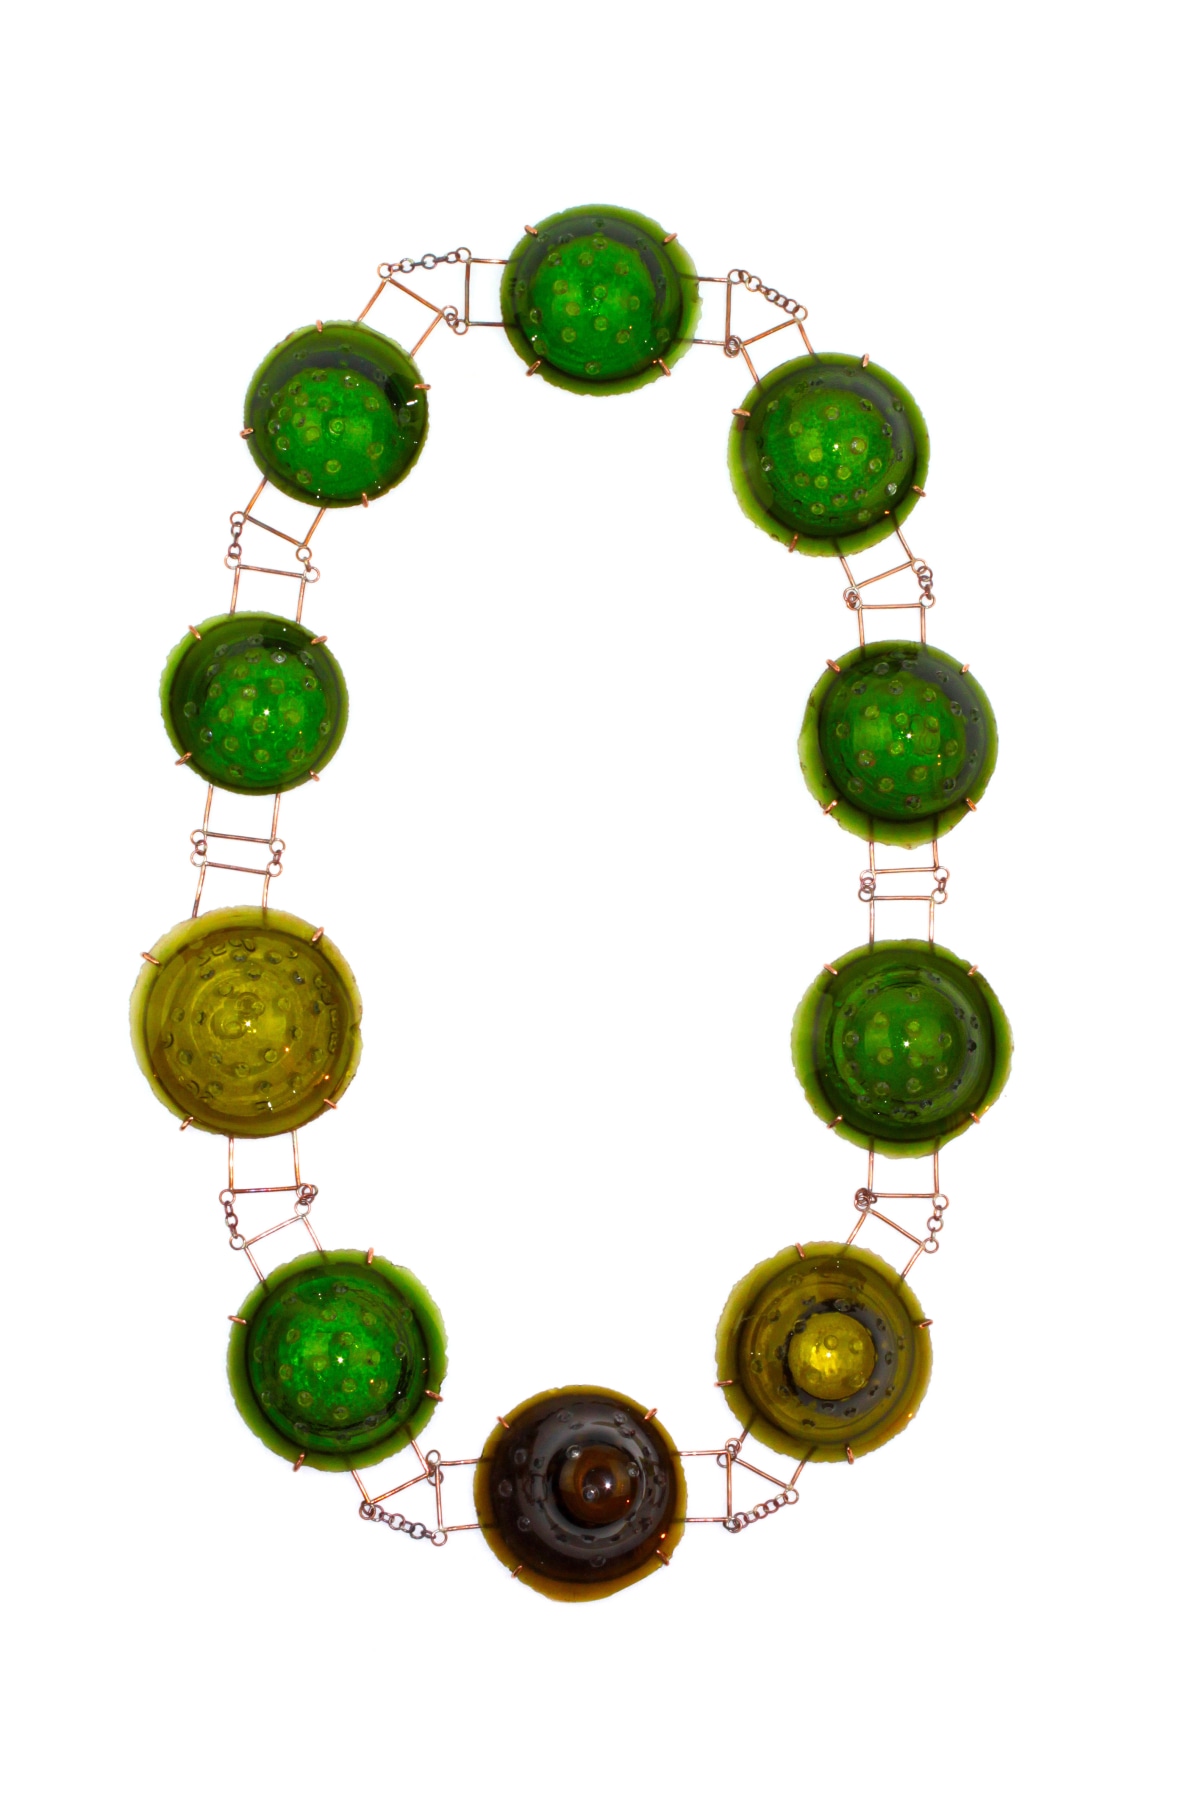 Philip Sajet, glass, contemporary jewelry, necklace